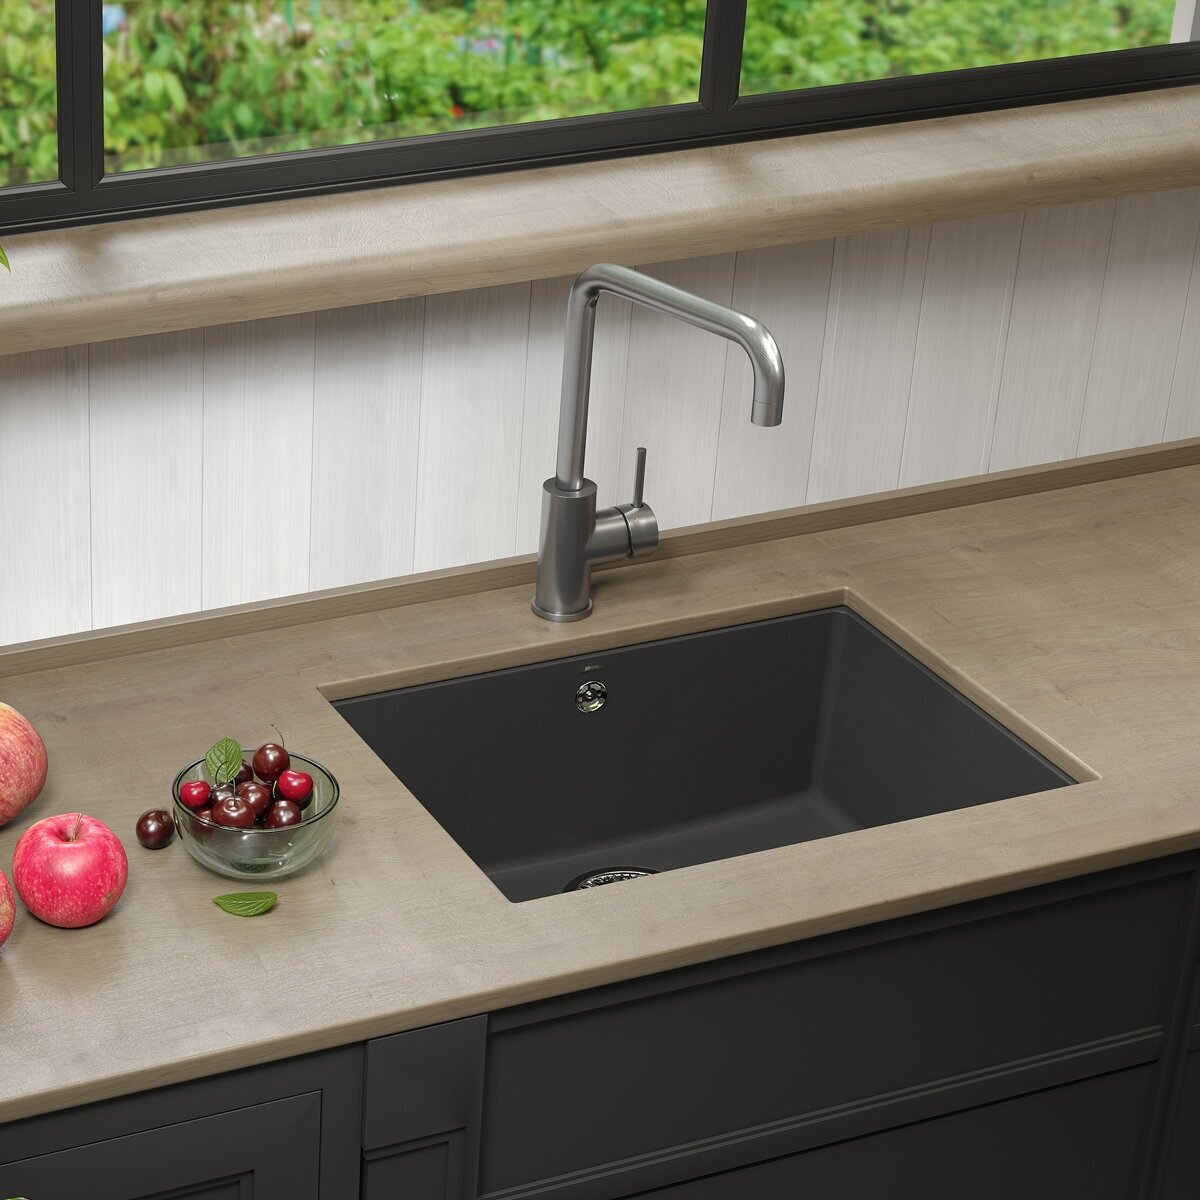 SINARA 540-U Мойка кухонная из кварцгранита цвет: серый шёлк комплектация: крепеж, сливная арматура с переливом в комплекте арт.9910077